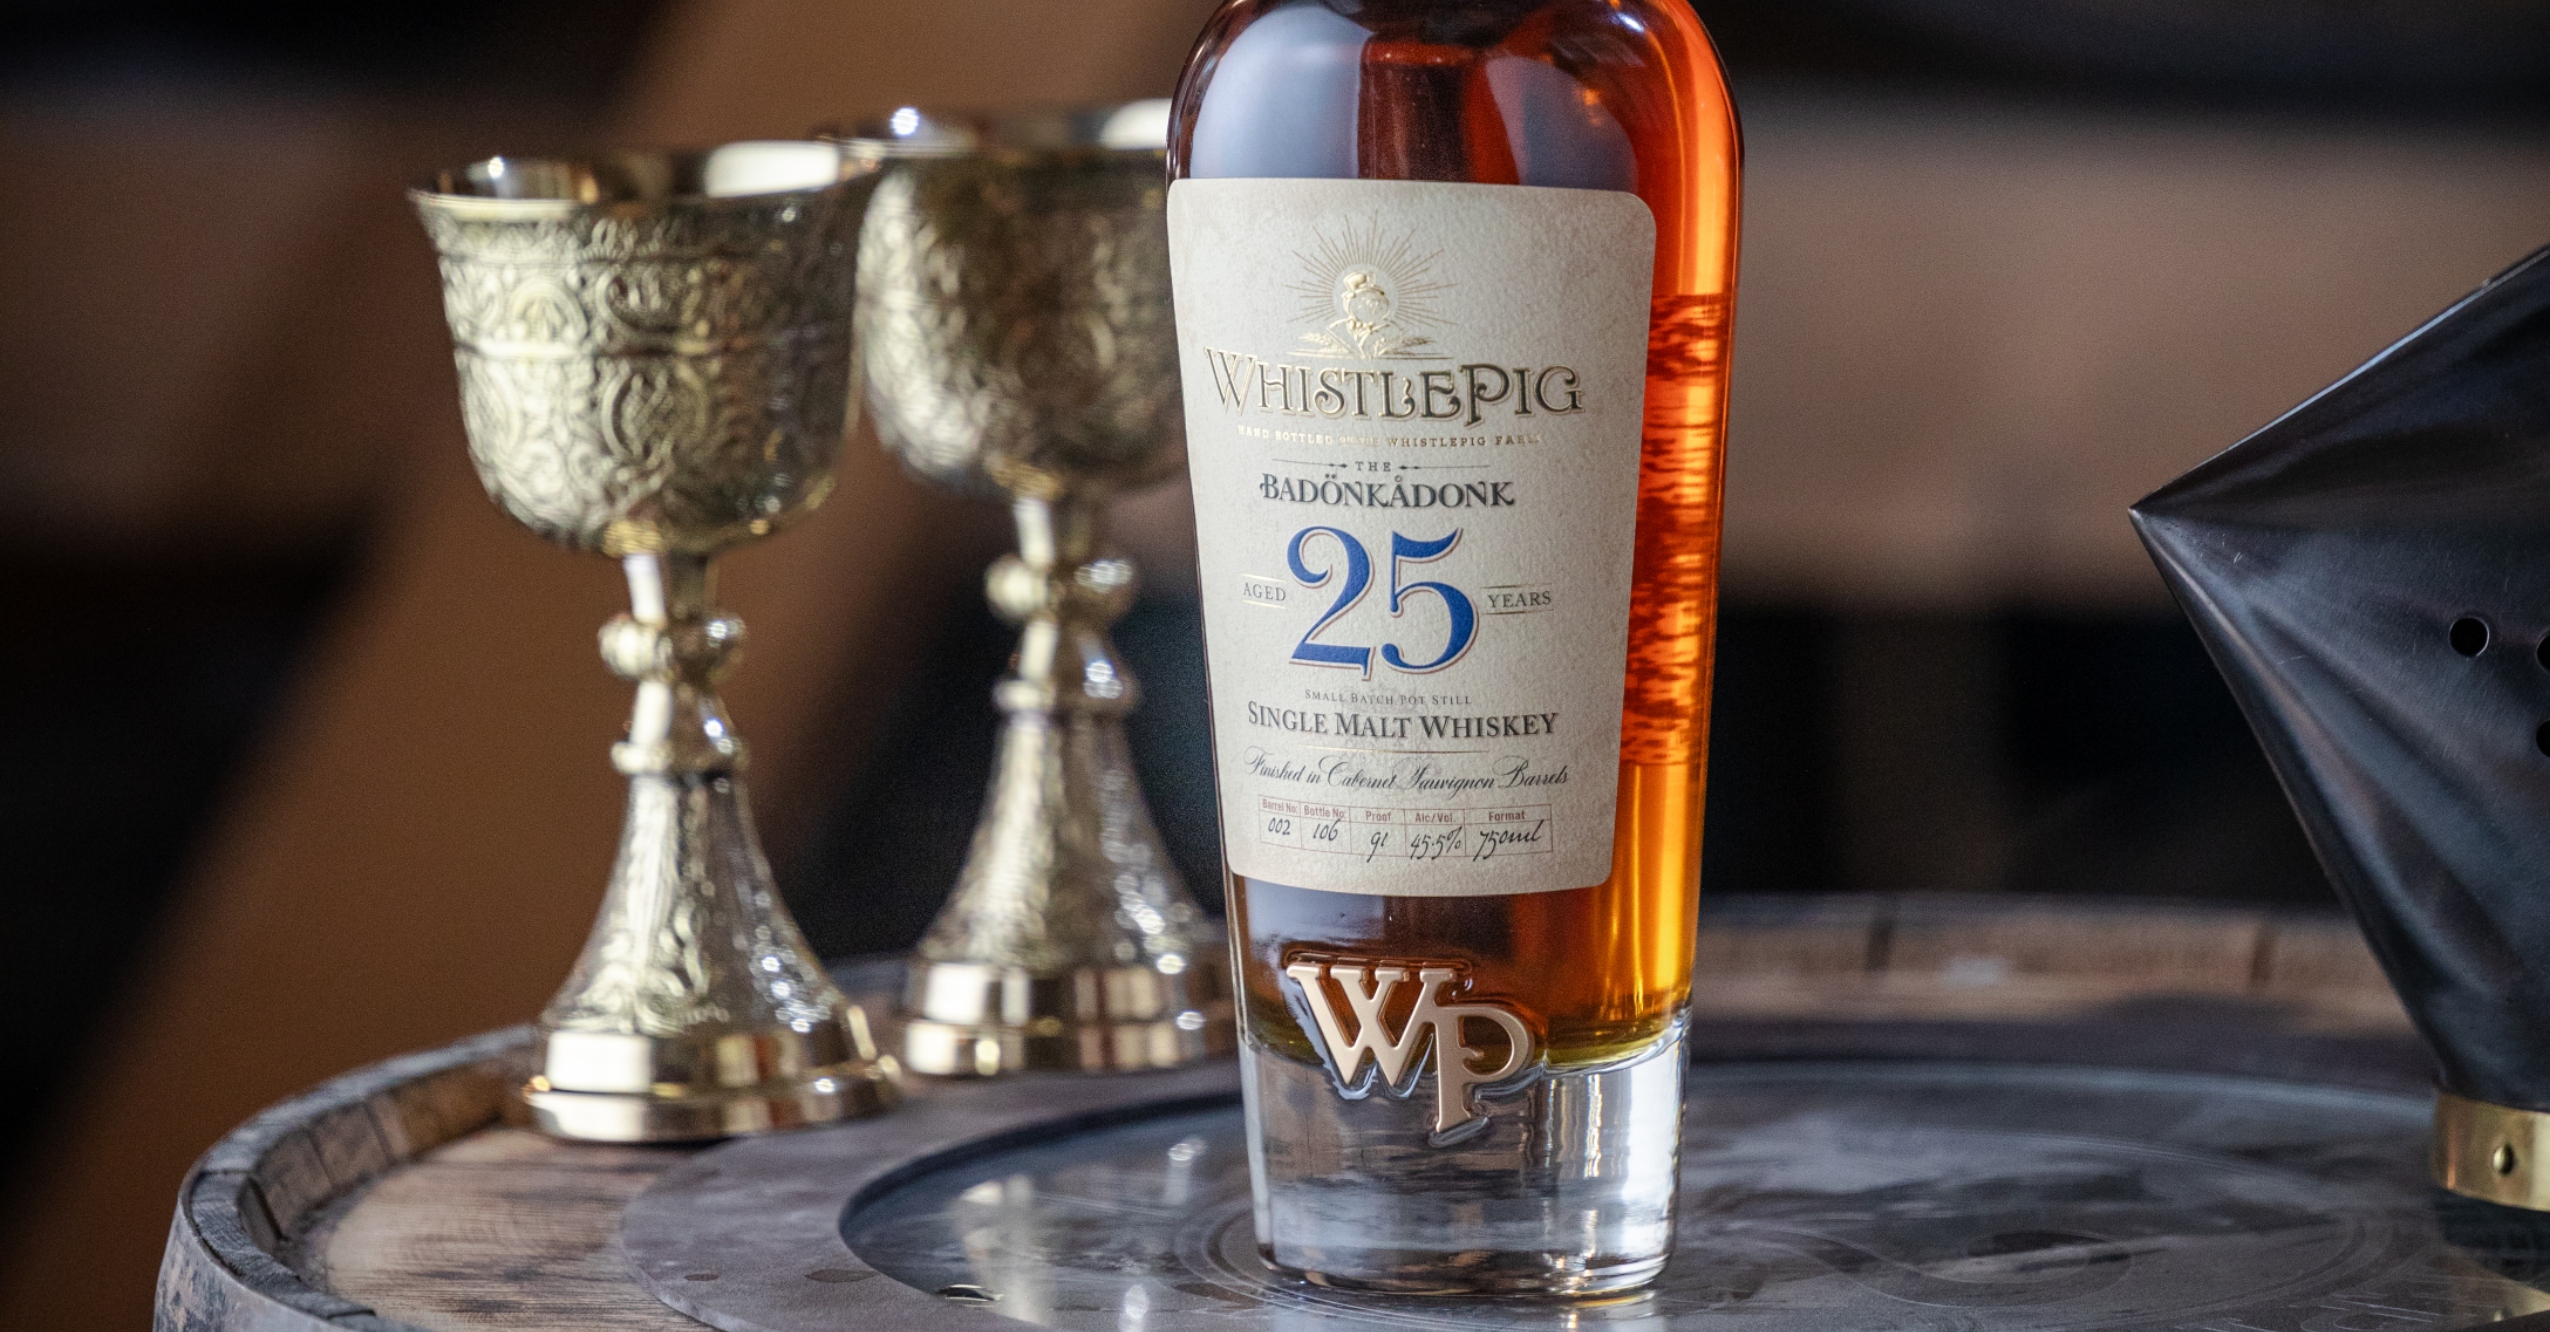 ‘WhistlePig 25: The Badönkådonk’ Satirizes Scotch With New Single Malt Whiskey